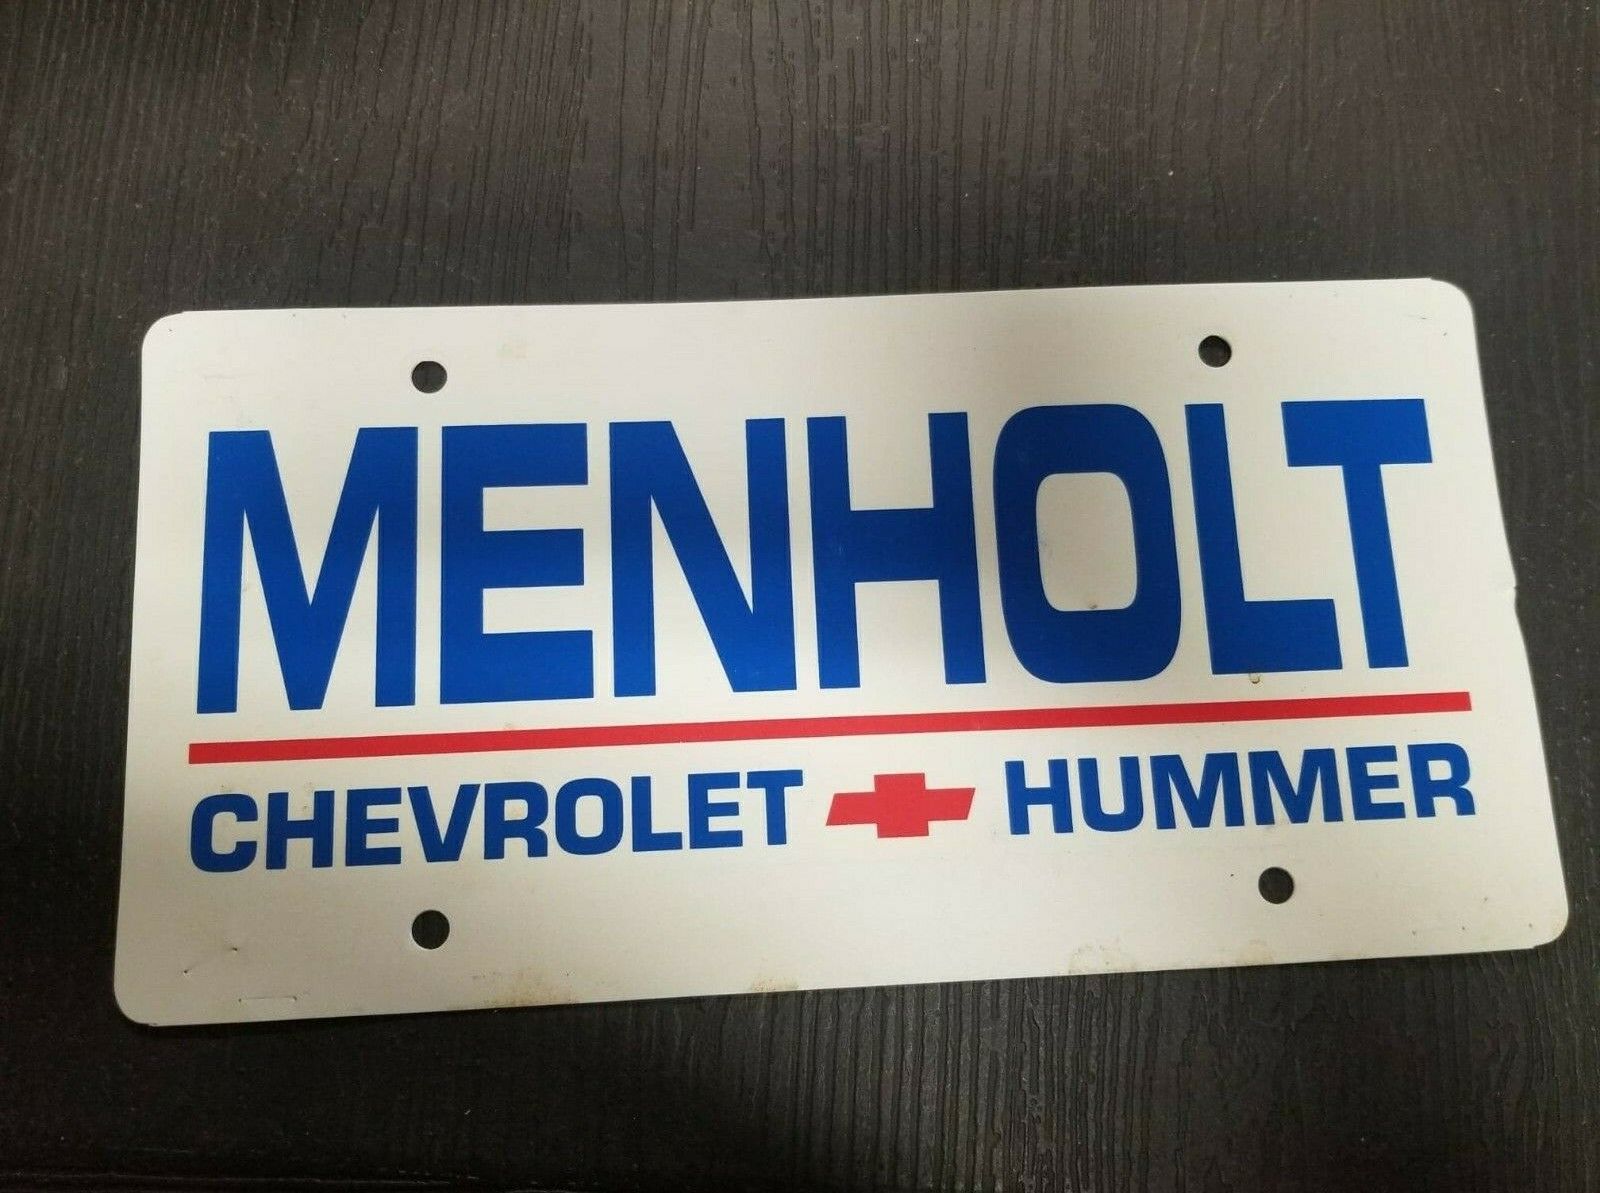 Menholt Chevrolet Hummer Plastic Dealer License Plate